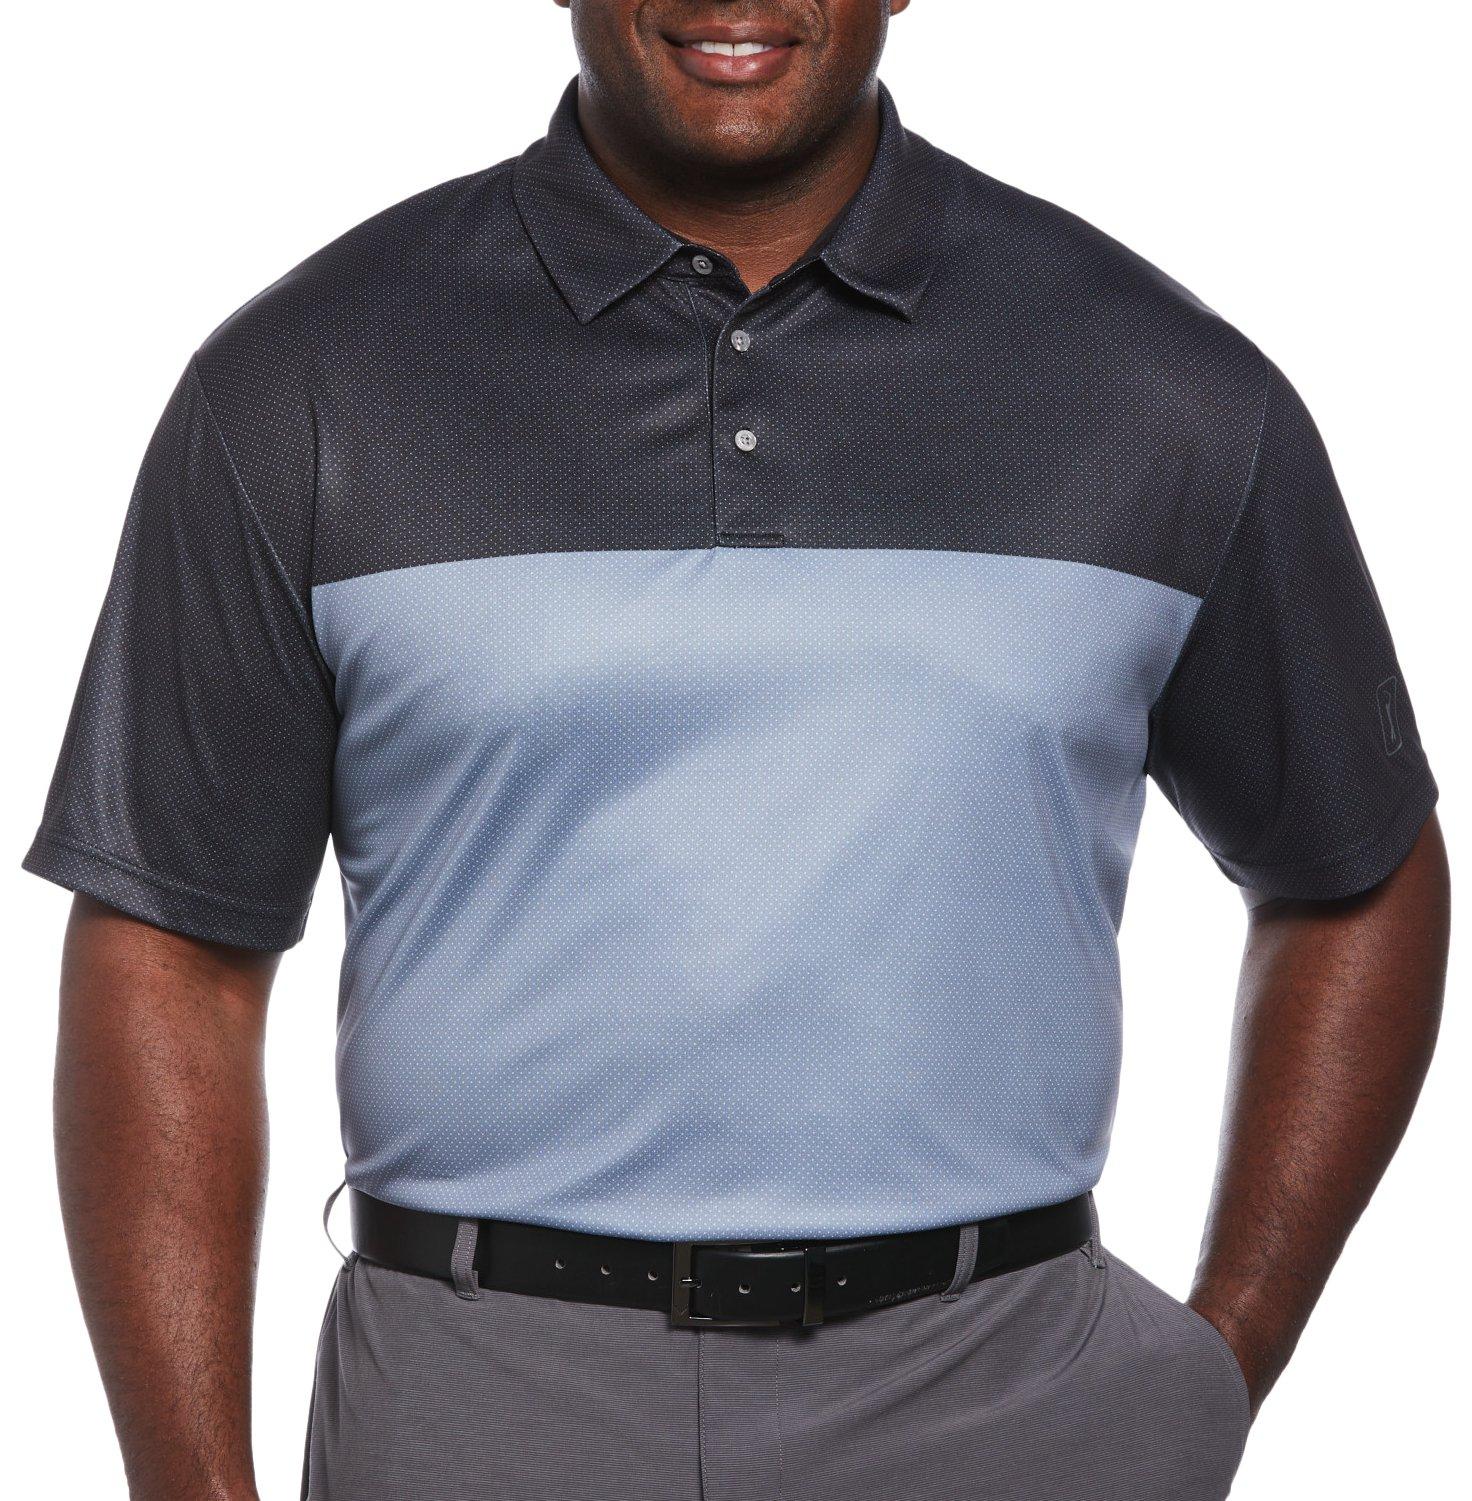 Mens Big & Tall Colorblock Short Sleeve Golf Polo Shirt